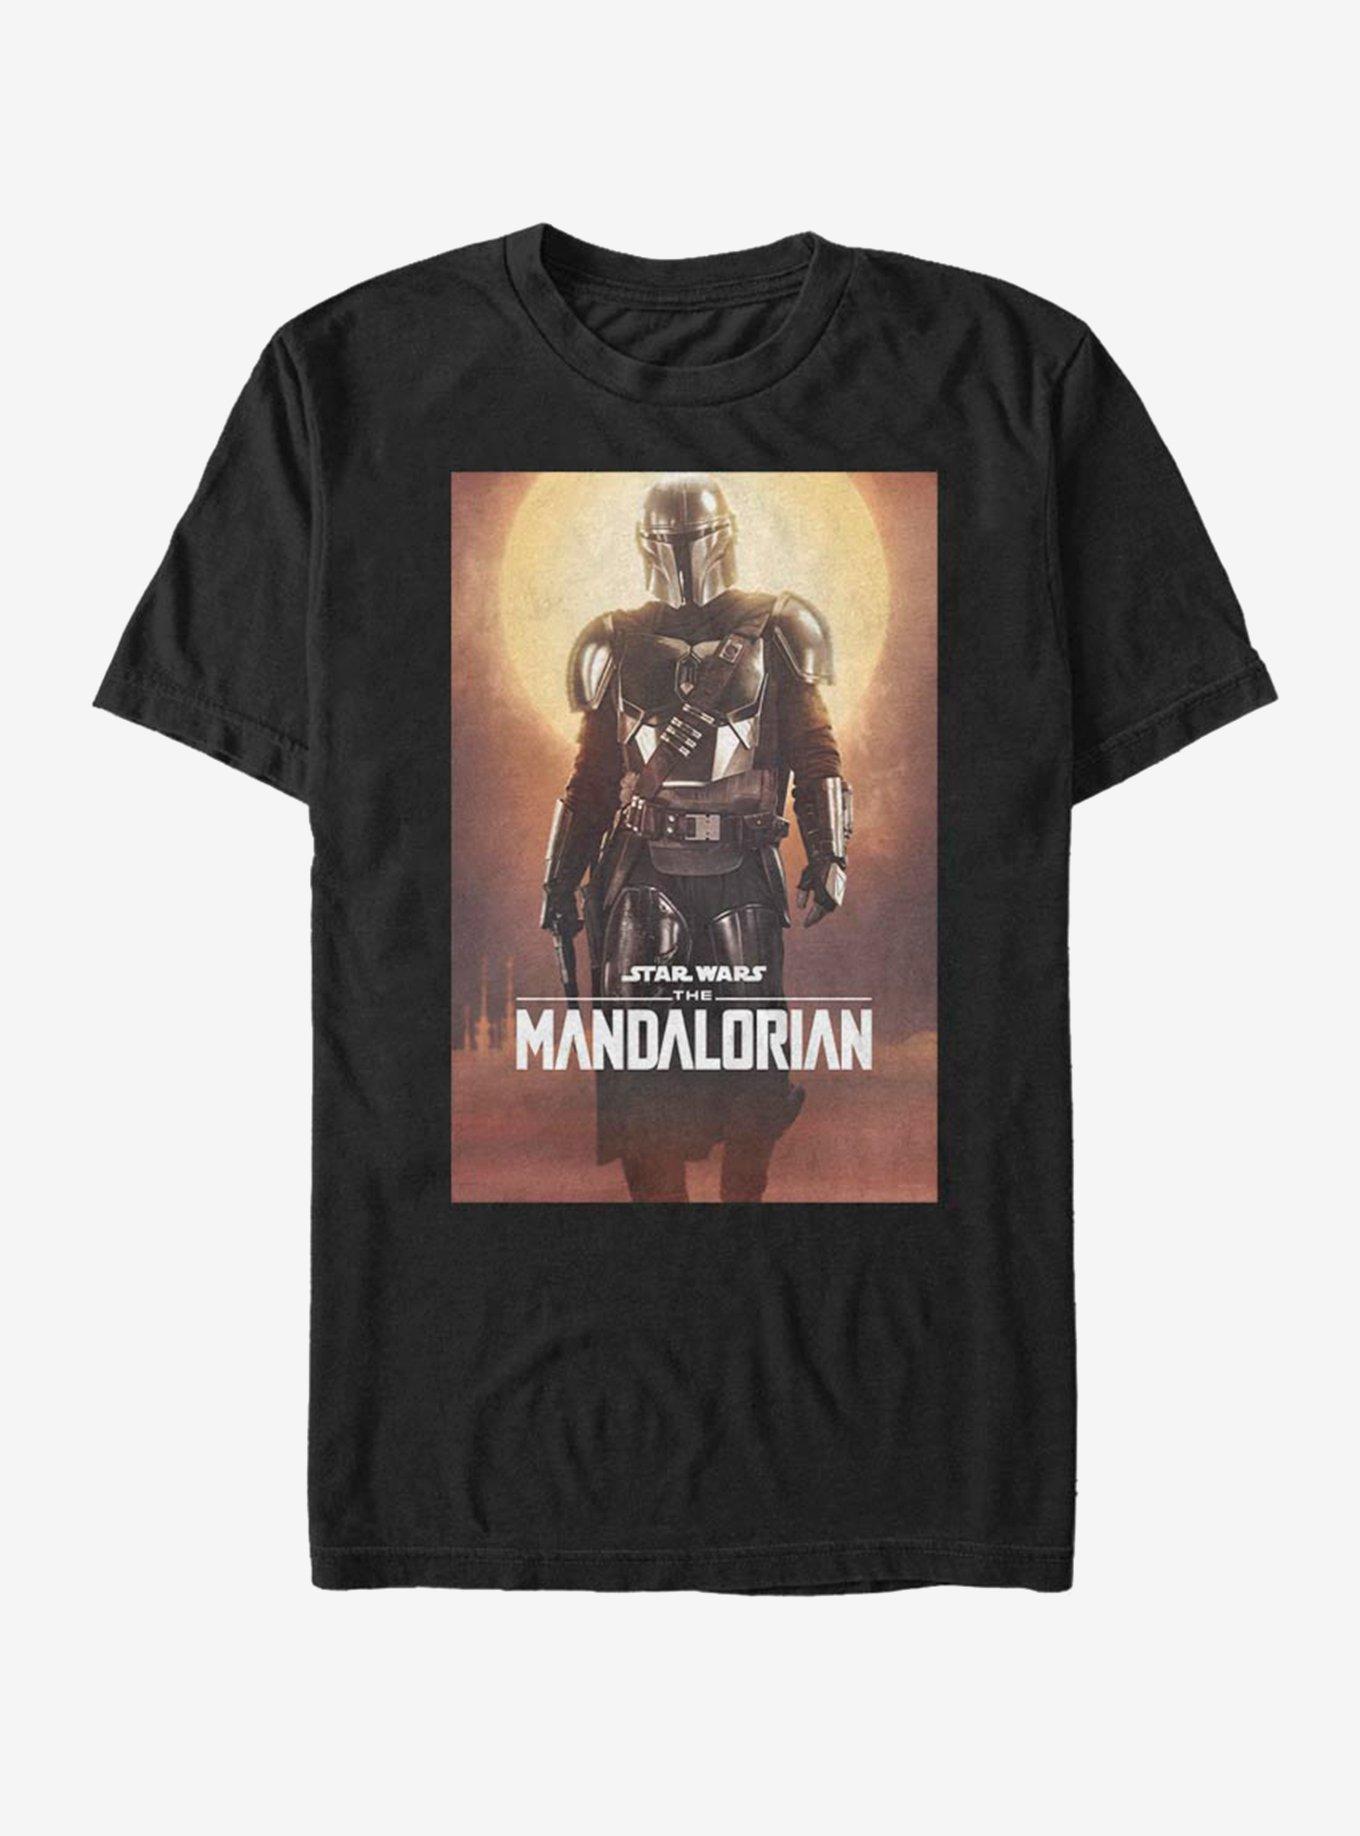 The Mandalorian Main Poster T-Shirt